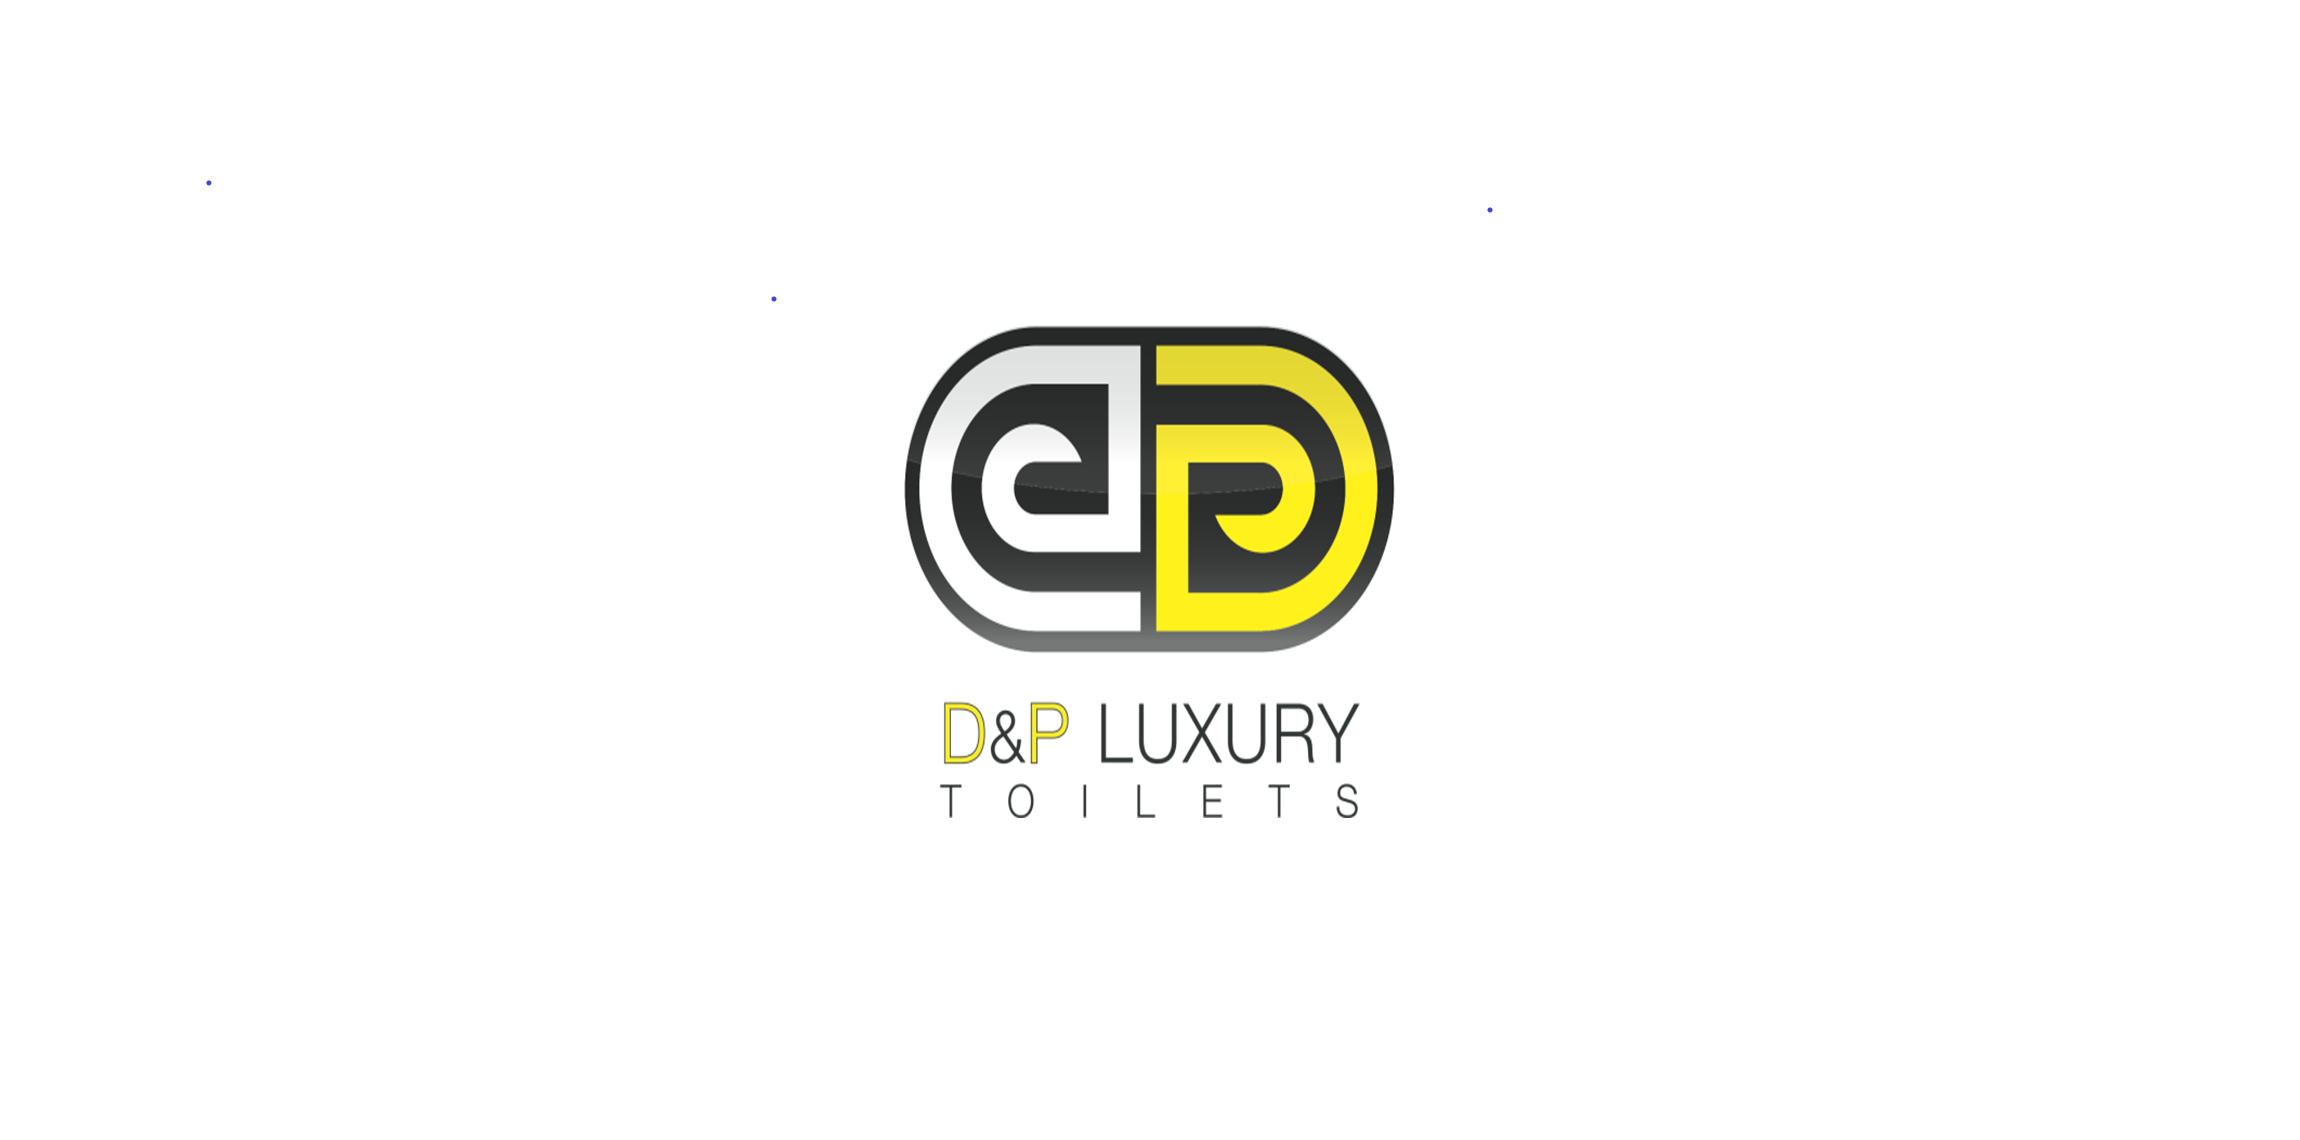 D&P Luxury Toilets